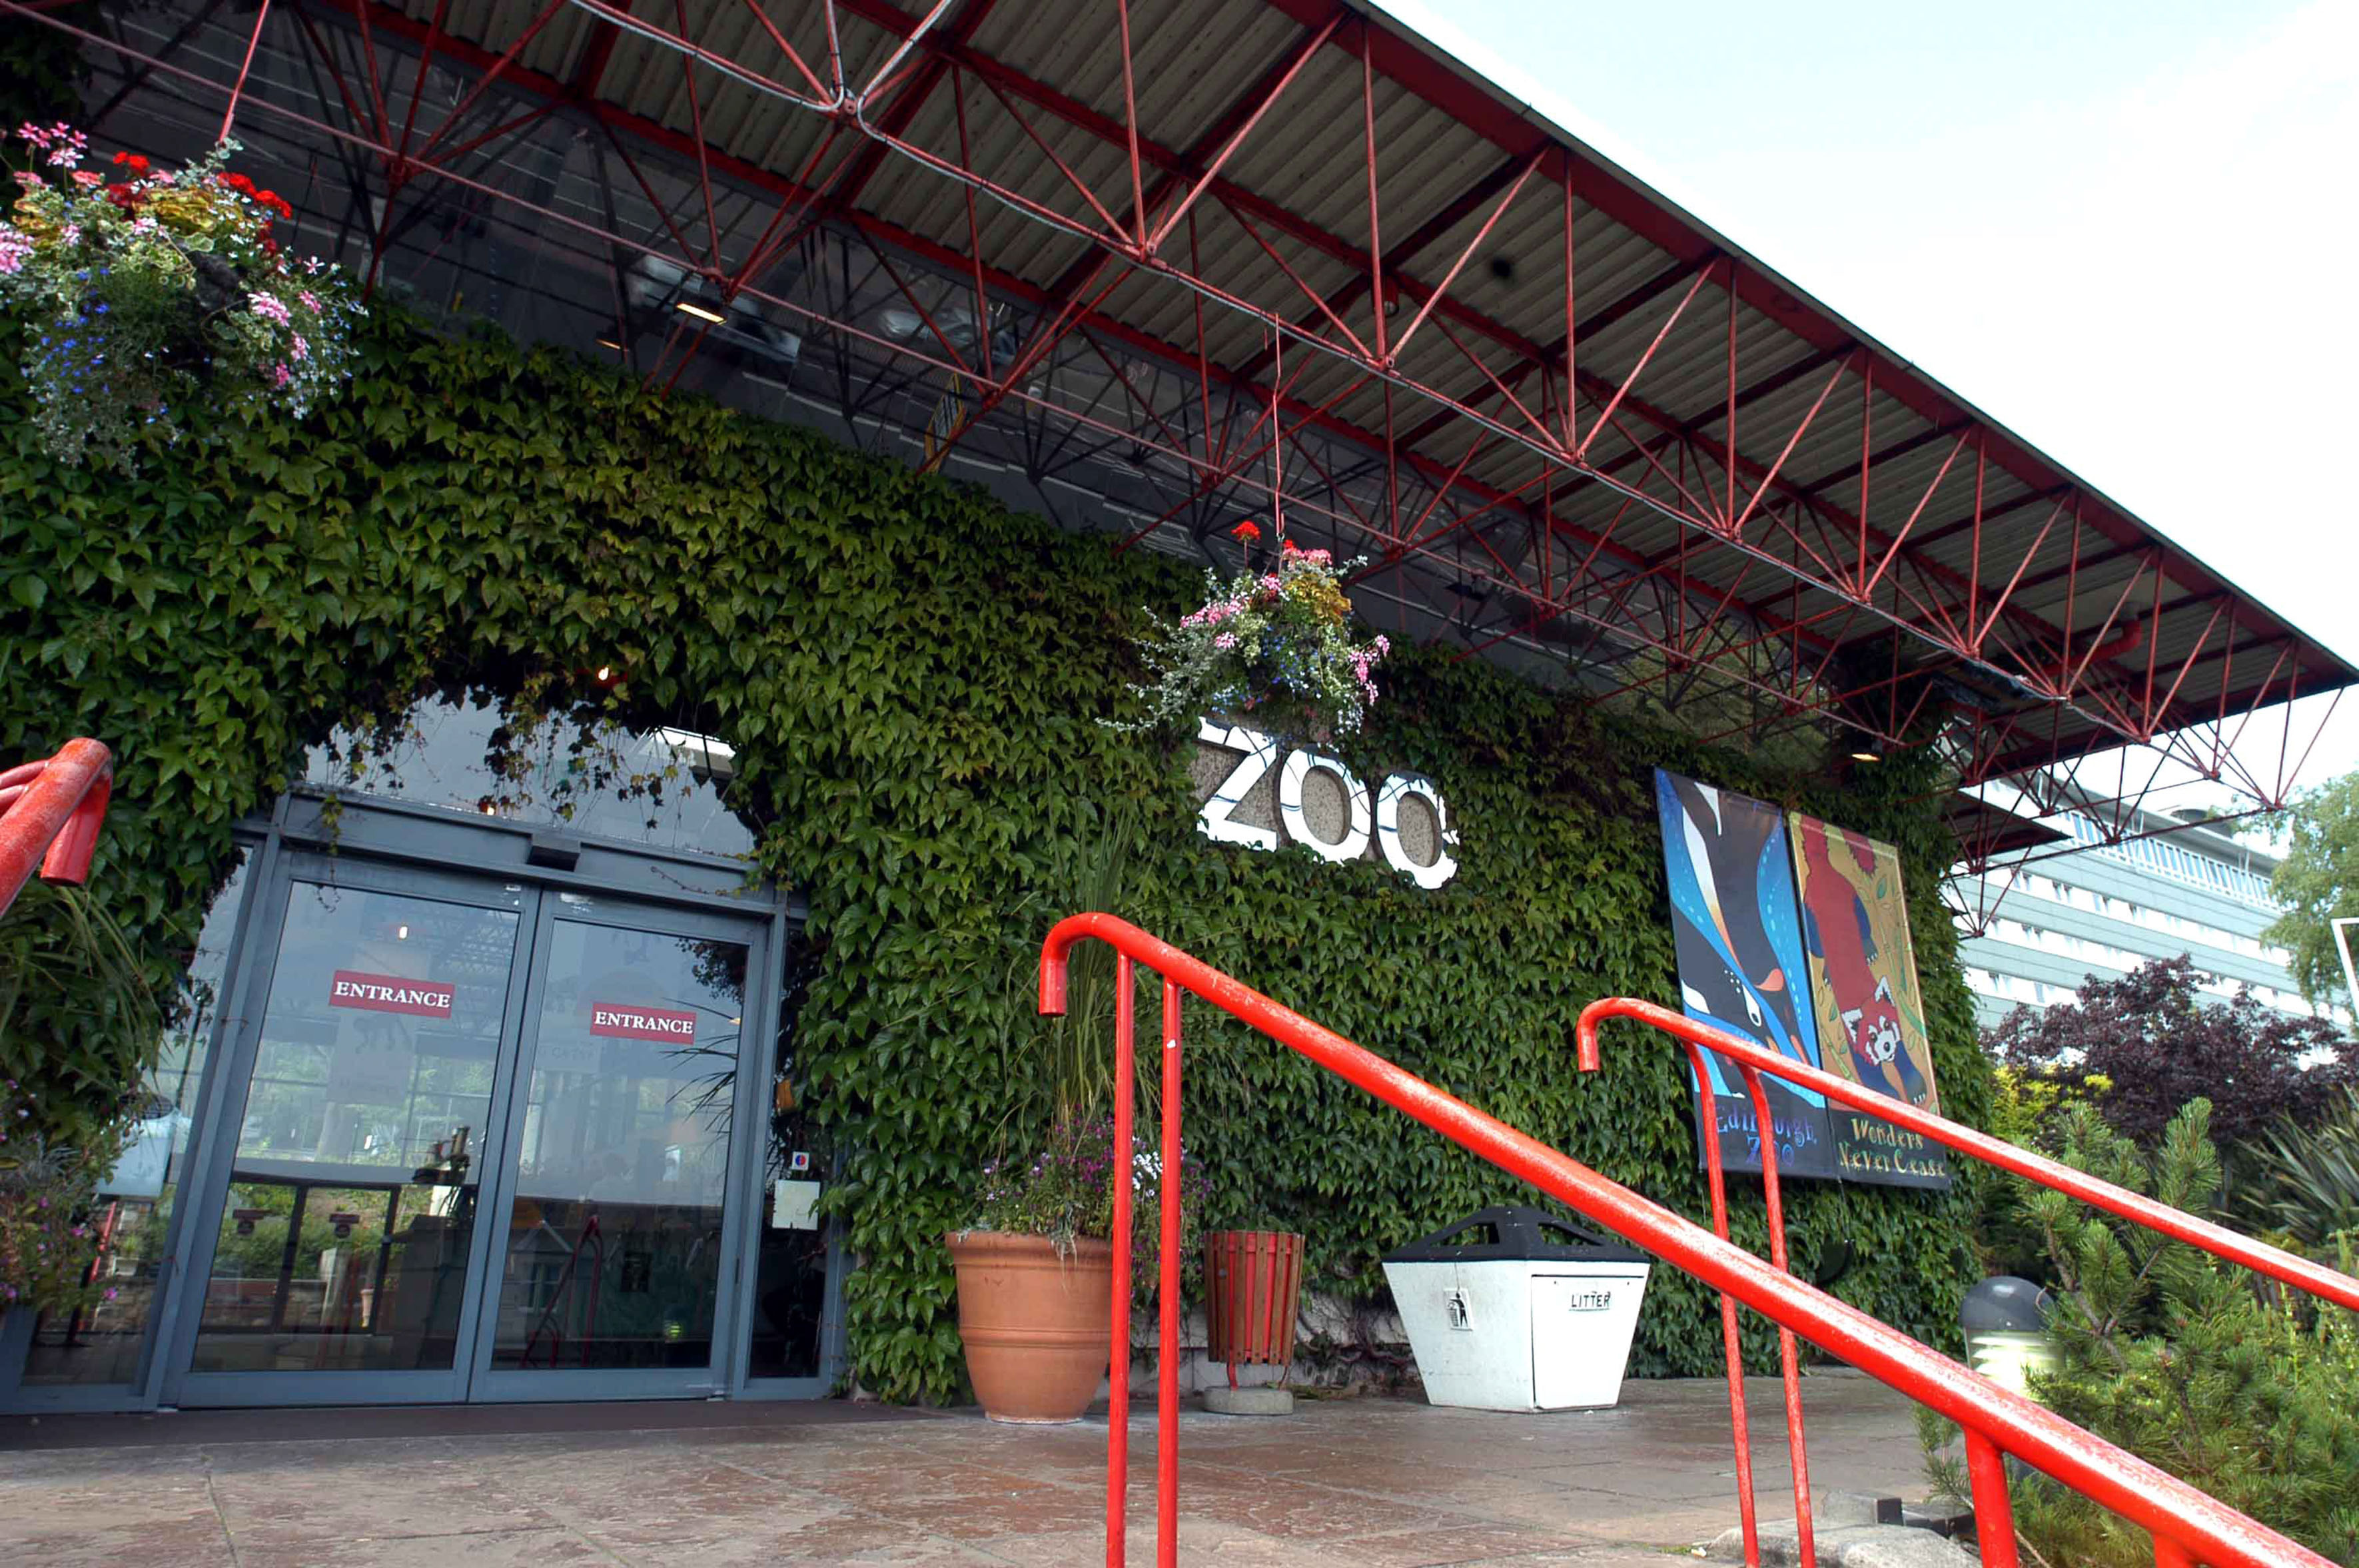 More than 600,000 people visit Edinburgh Zoo every year